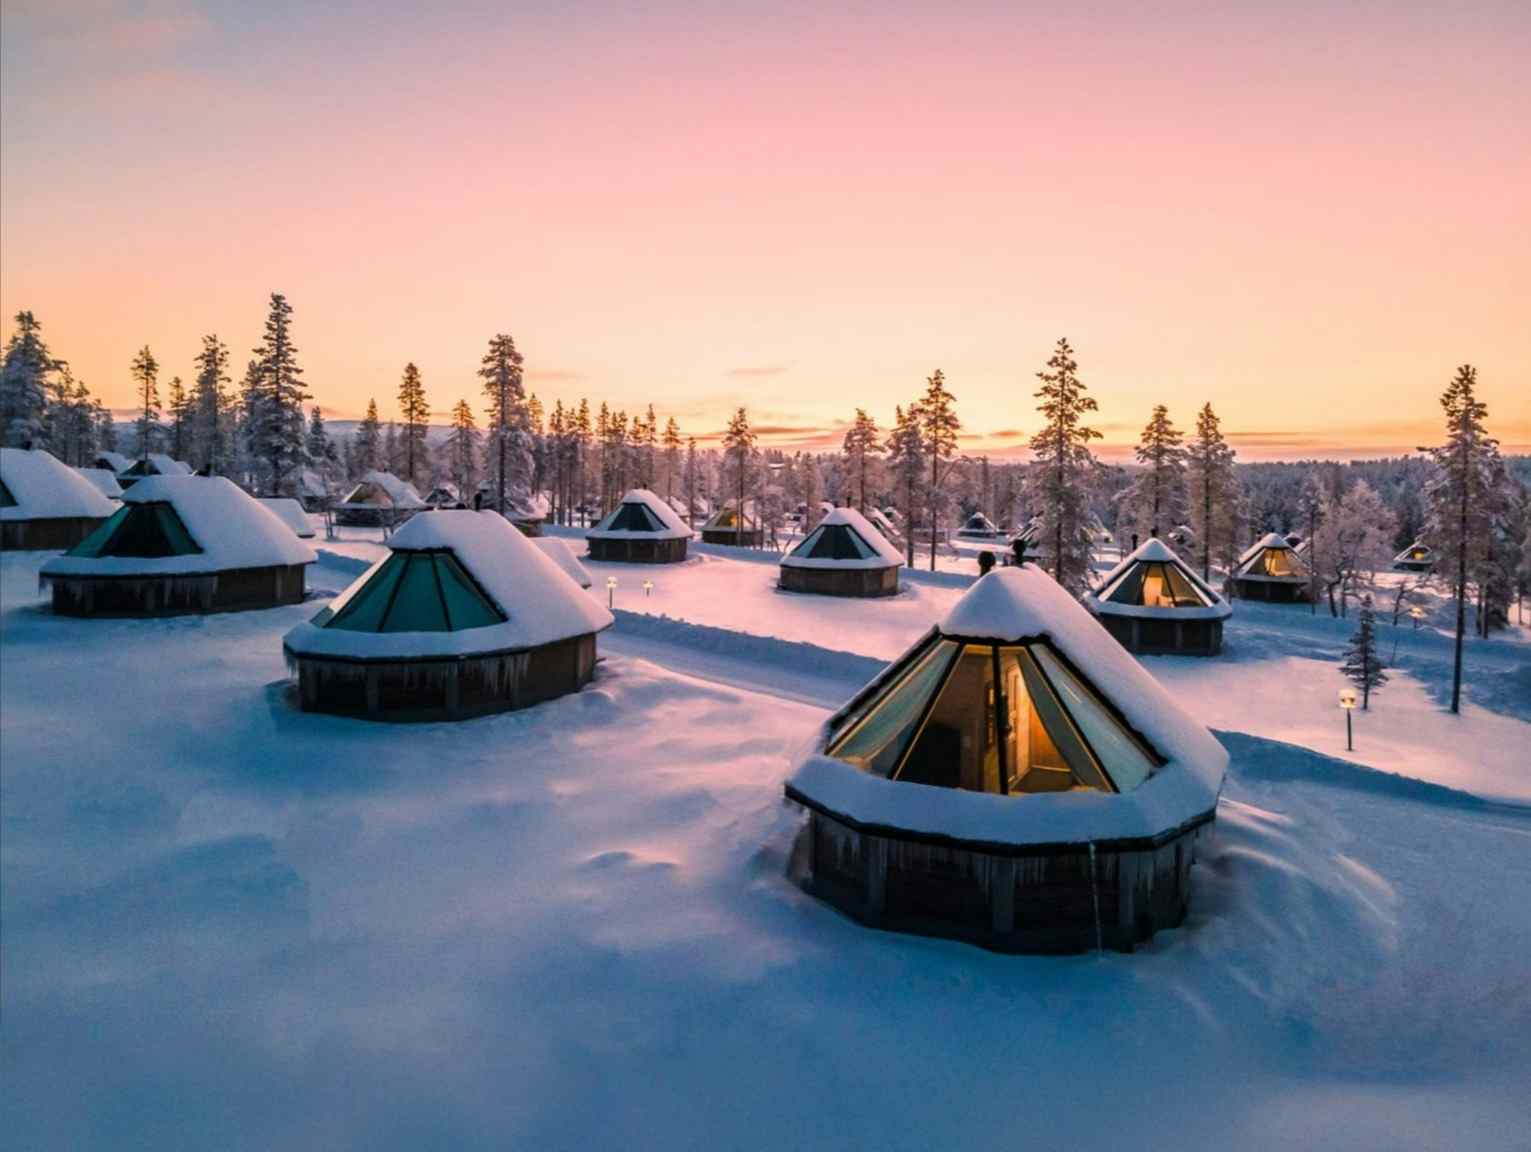 Aurora cabins in Pyha, Finland at sunset.